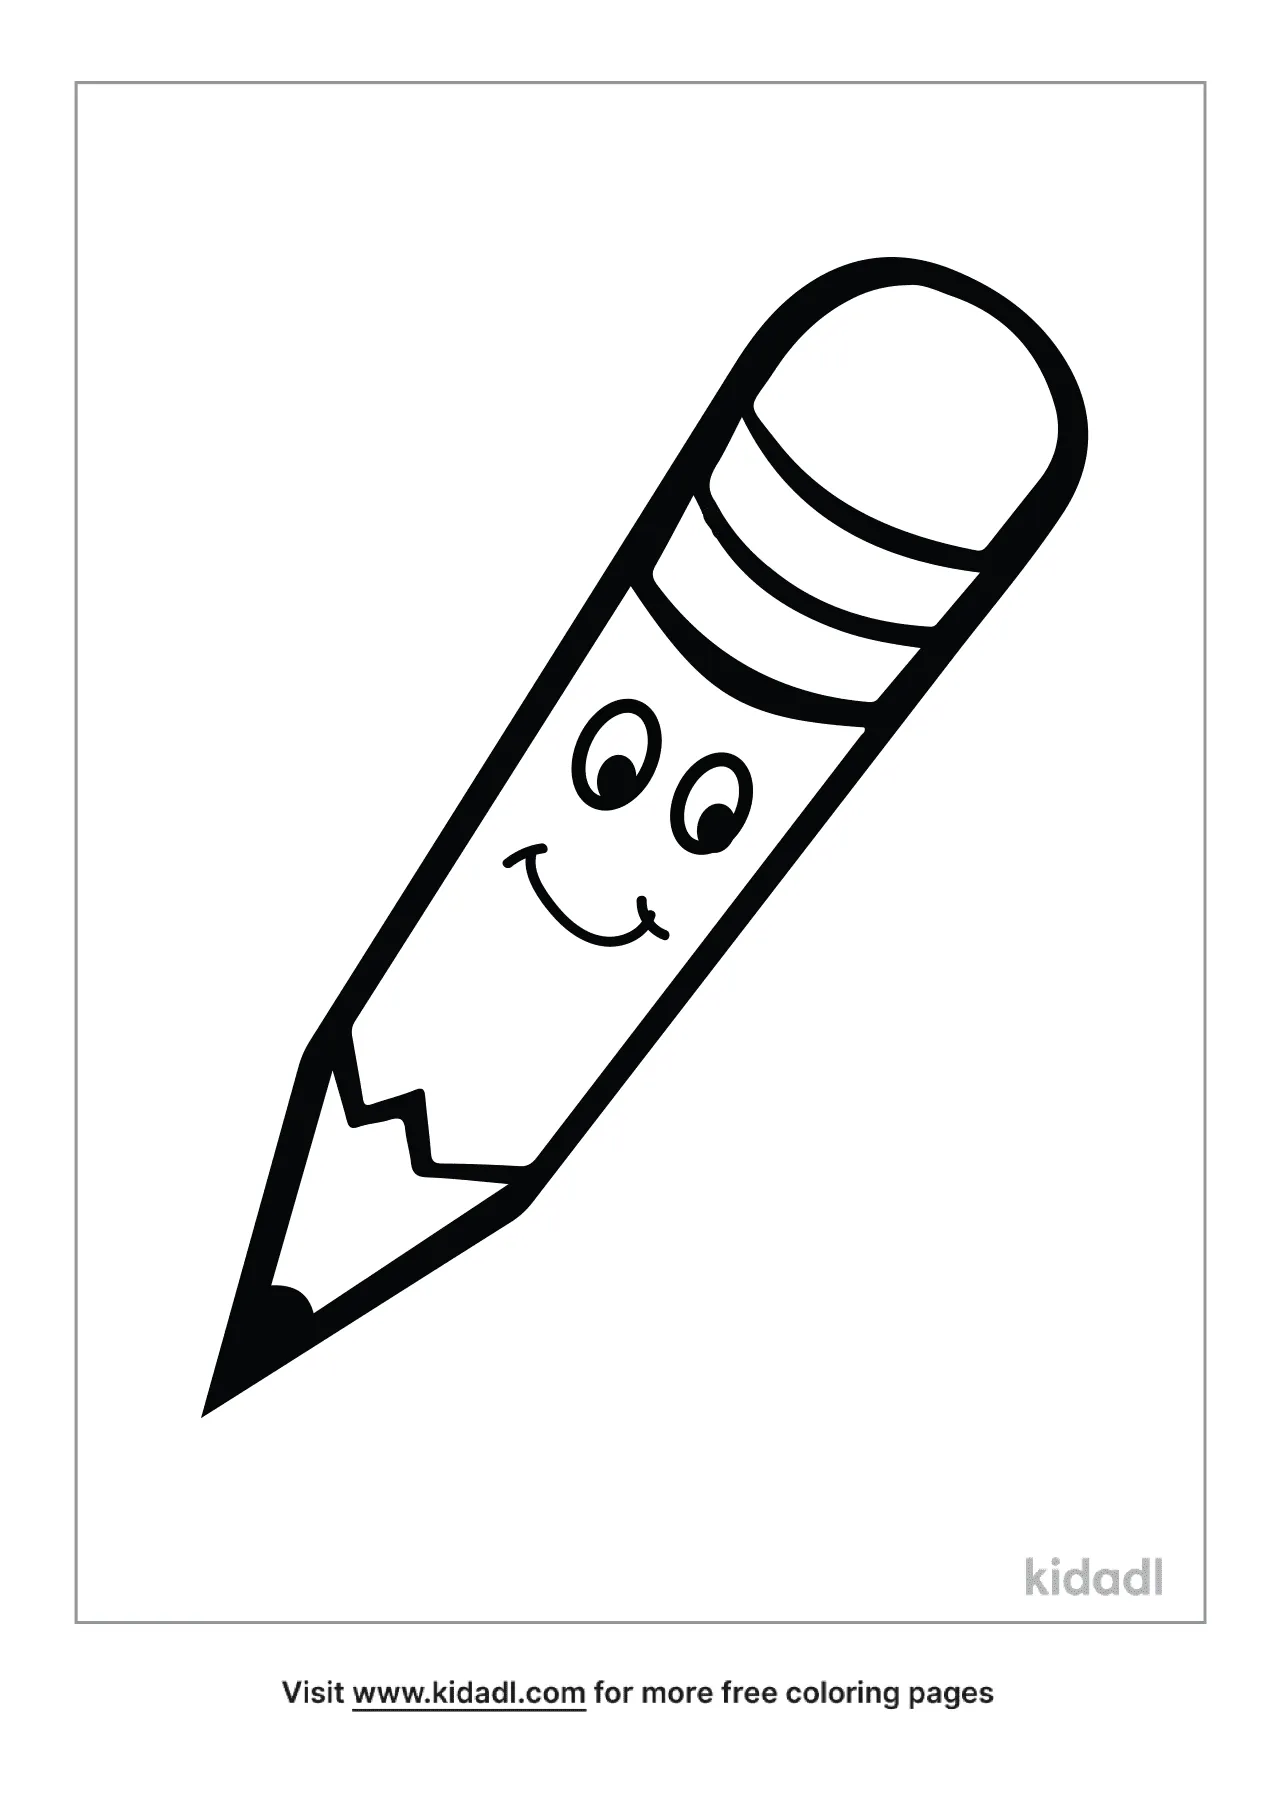 Free Cartoon Pencil Coloring Page | Coloring Page Printables | Kidadl